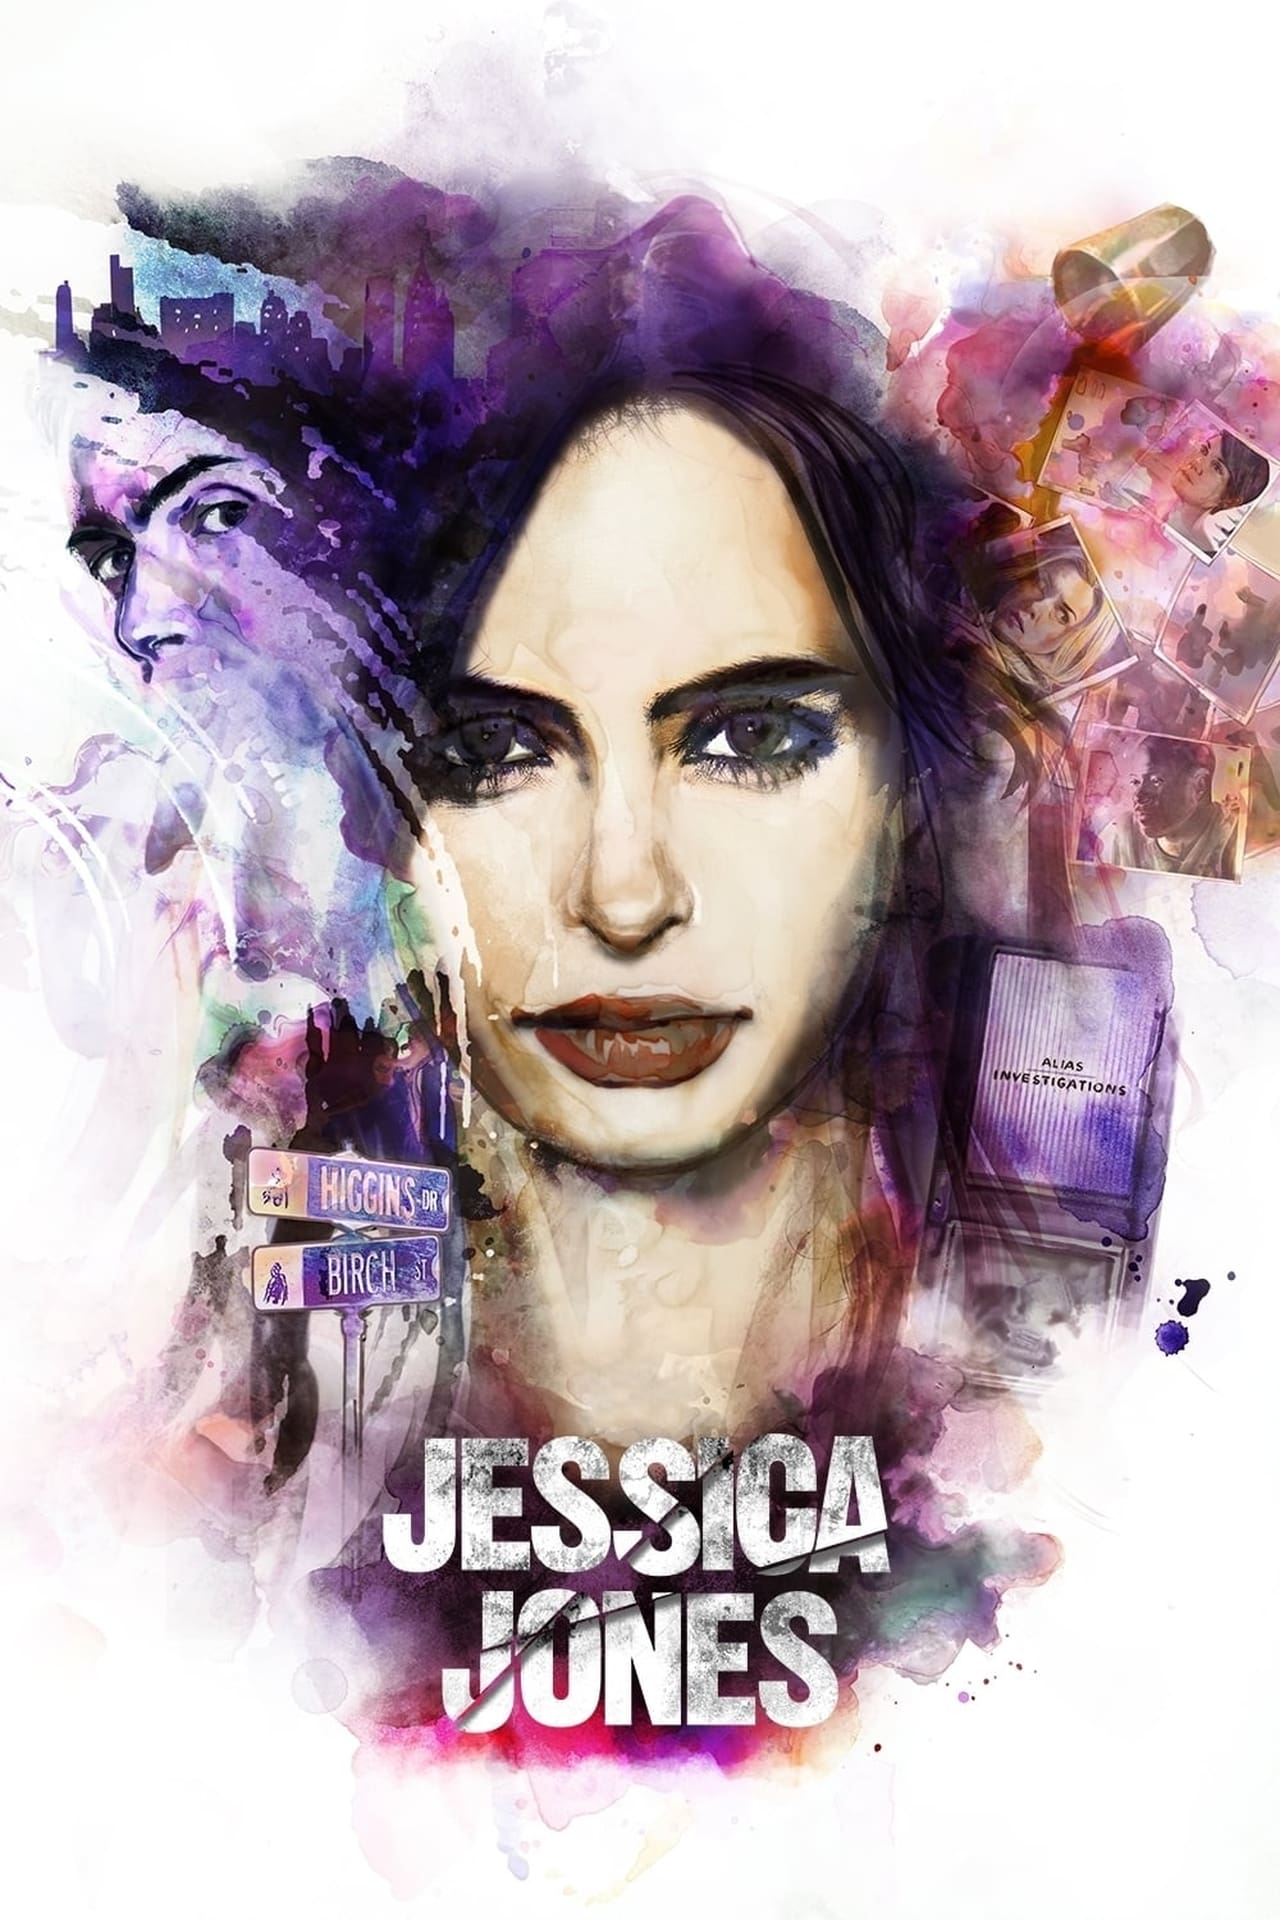 Jessica Jones (2019) S3 EP01&EP13 256Kbps 23.976Fps 48Khz 5.1Ch Disney+ DD+ E-AC3 Turkish Audio TAC